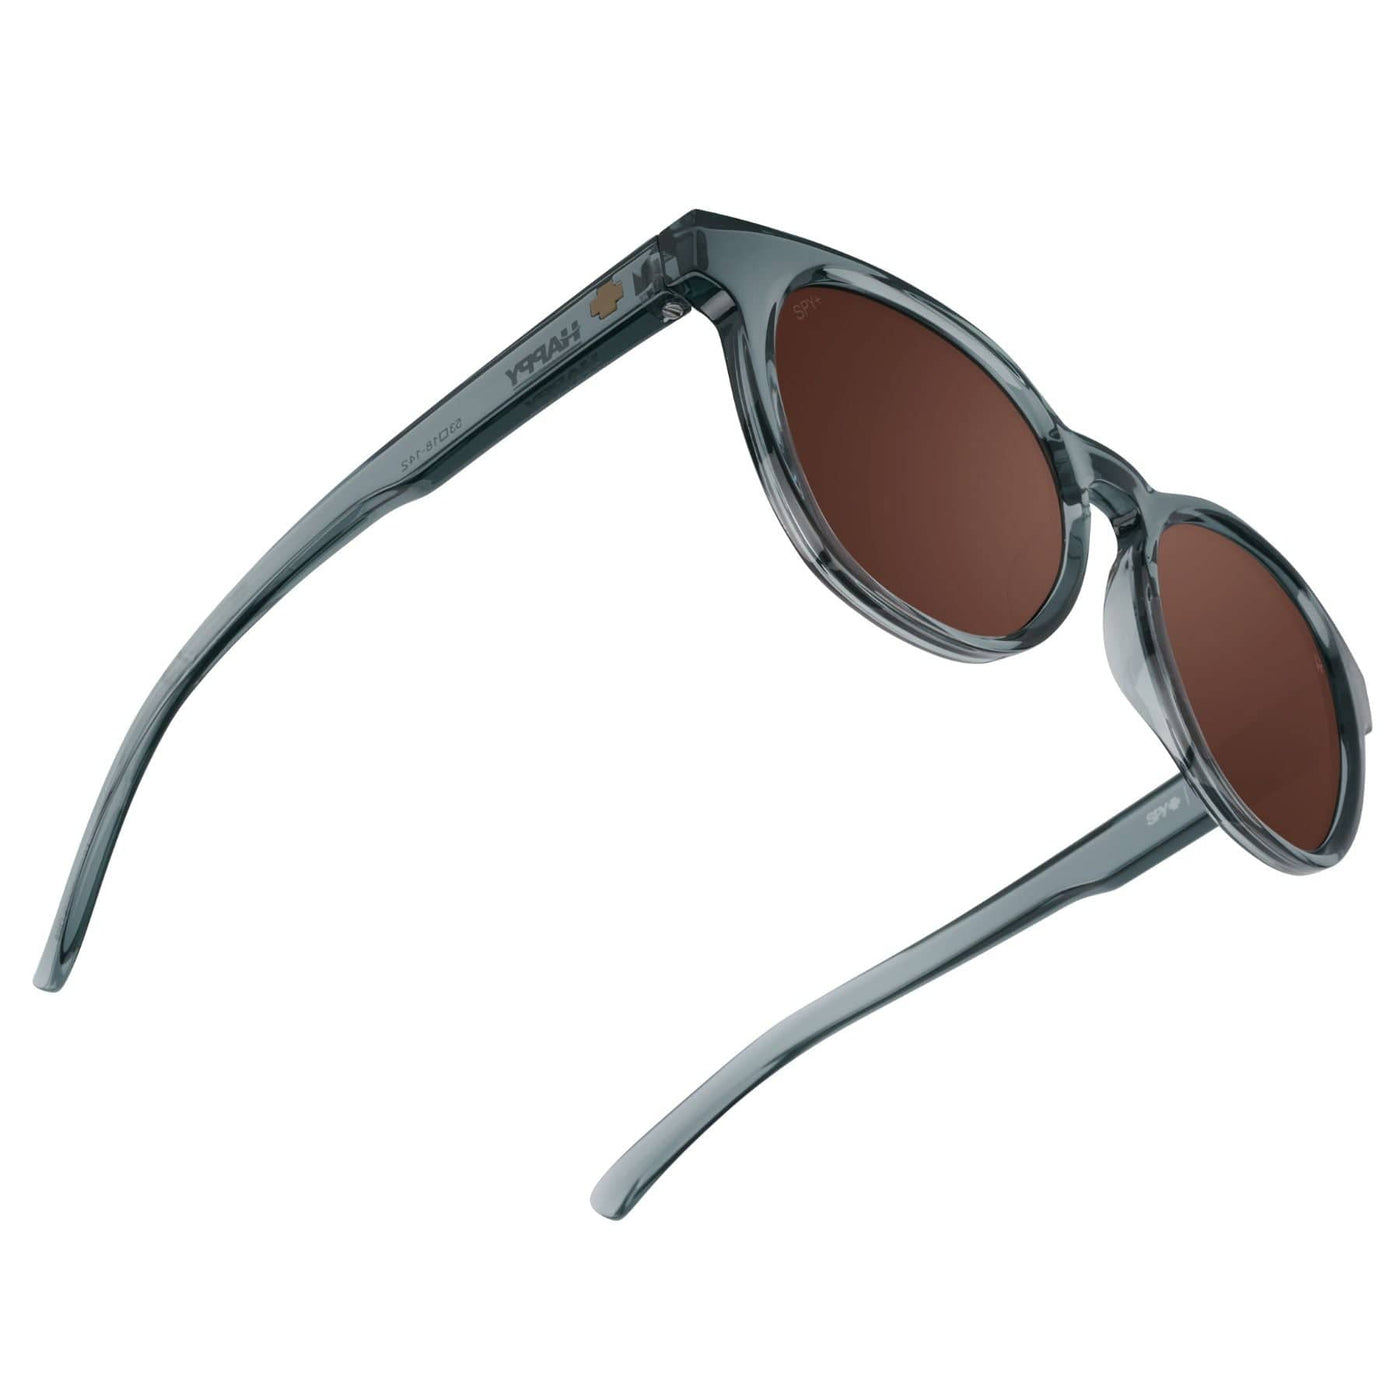 SPY CEDROS Sunglasses, Happy Lens - Bronze 8Lines Shop - Fast Shipping